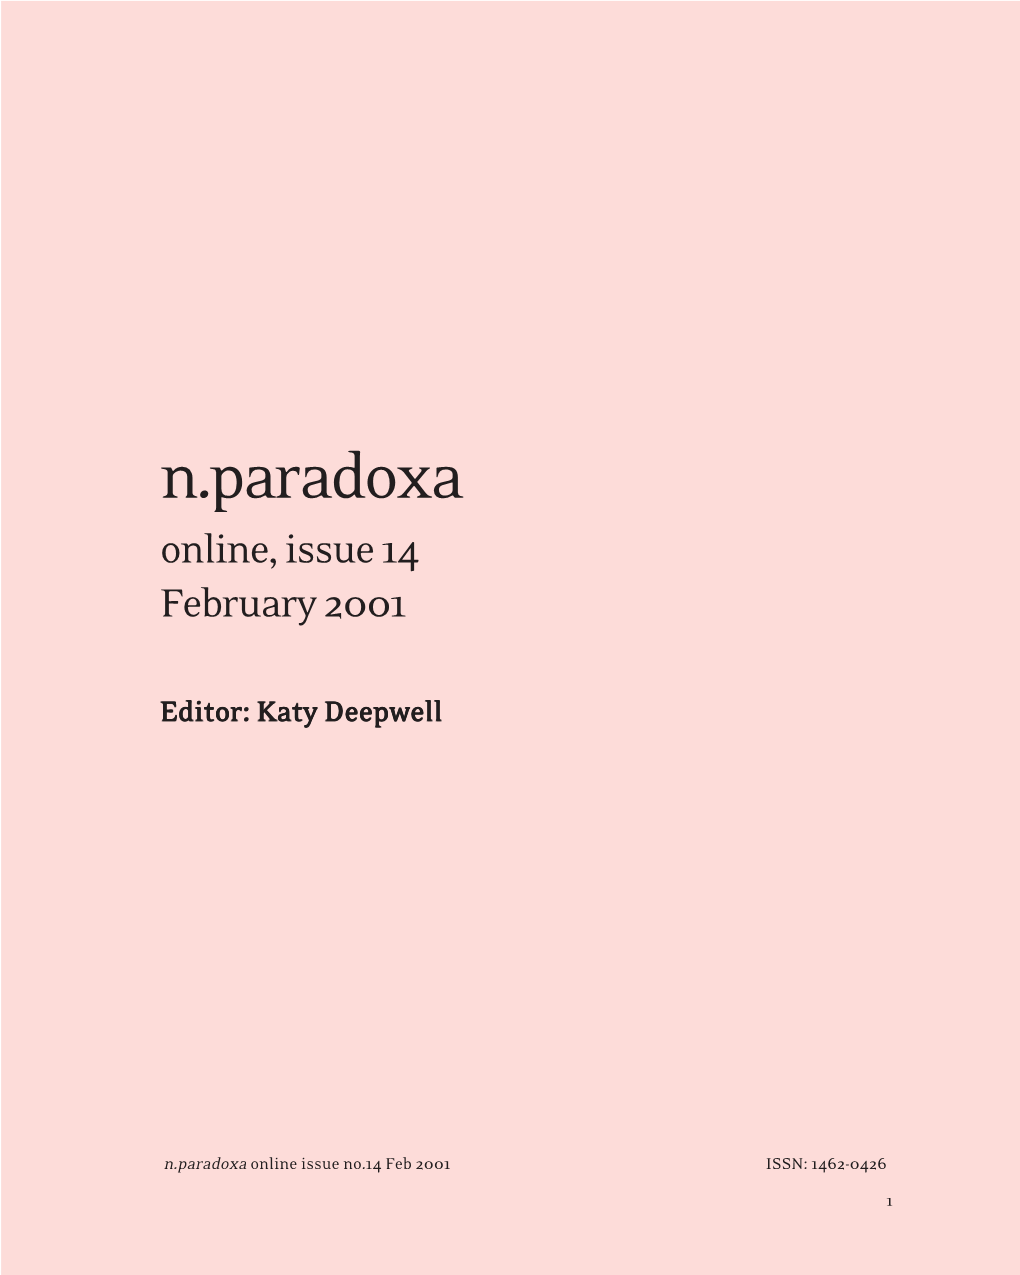 N.Paradoxa Online Issue 14, Feb 2001